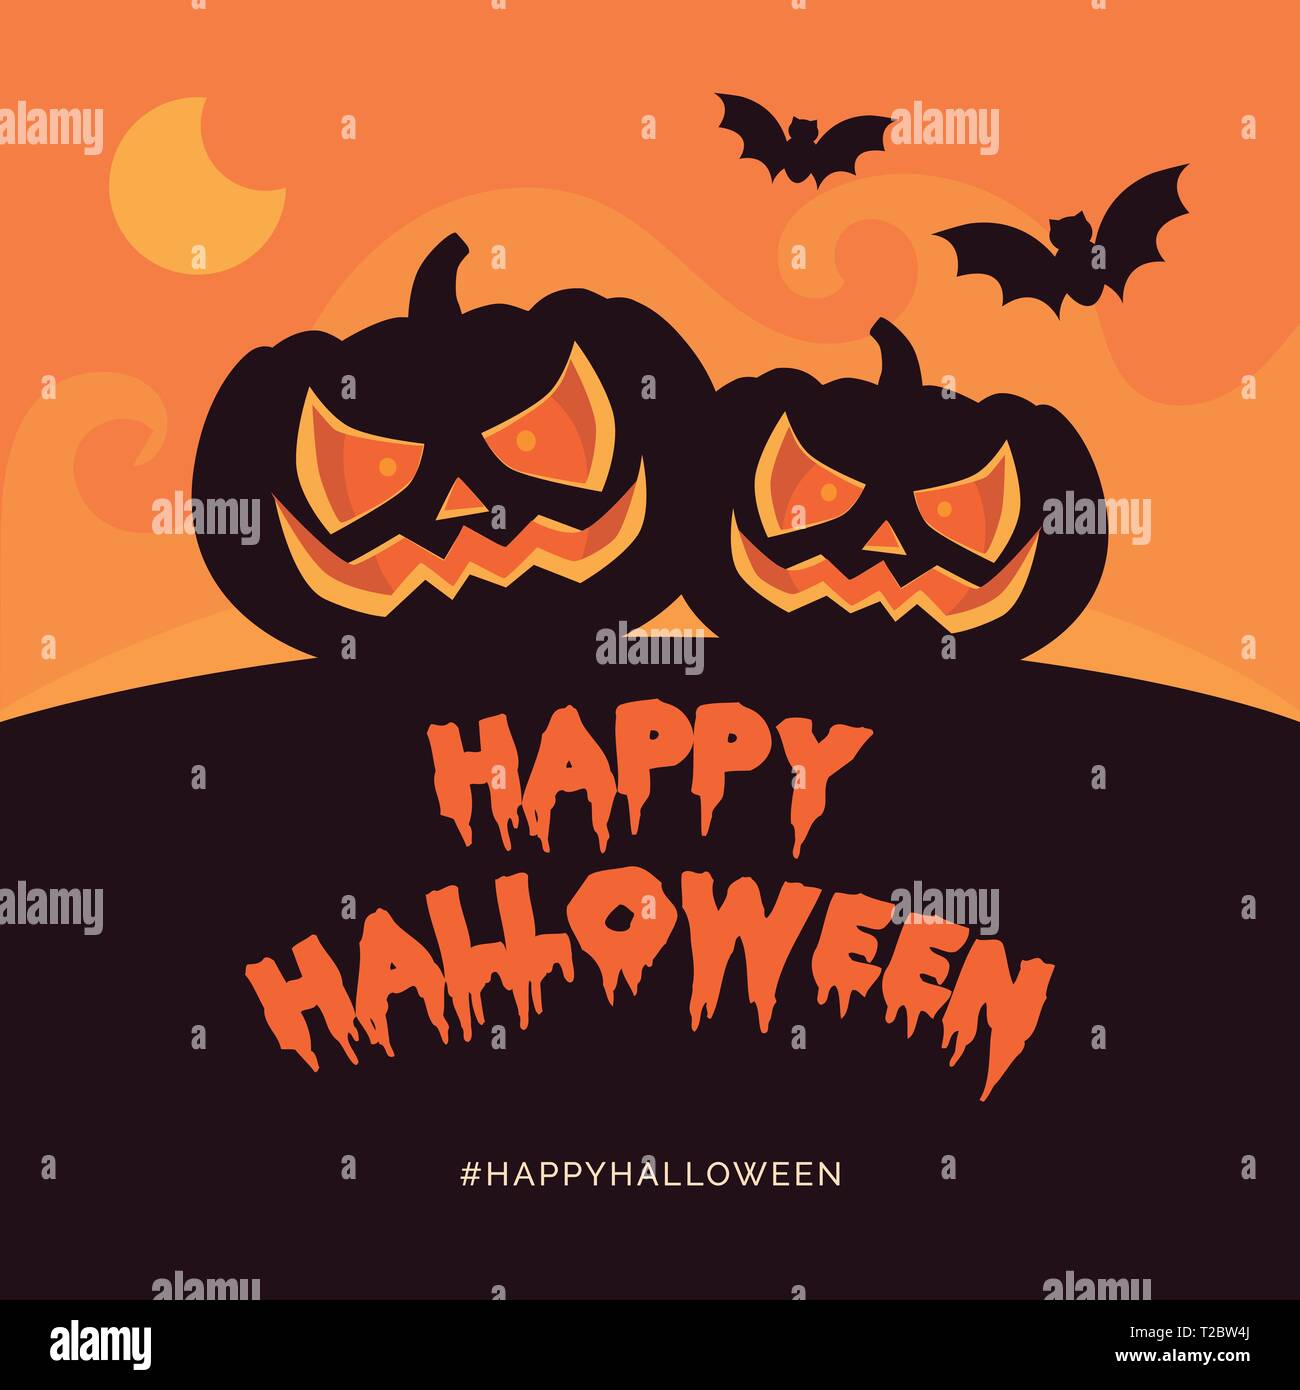 Happy Halloween Holiday Card und social media Post mit Kürbissen und Fledermäuse Stock Vektor